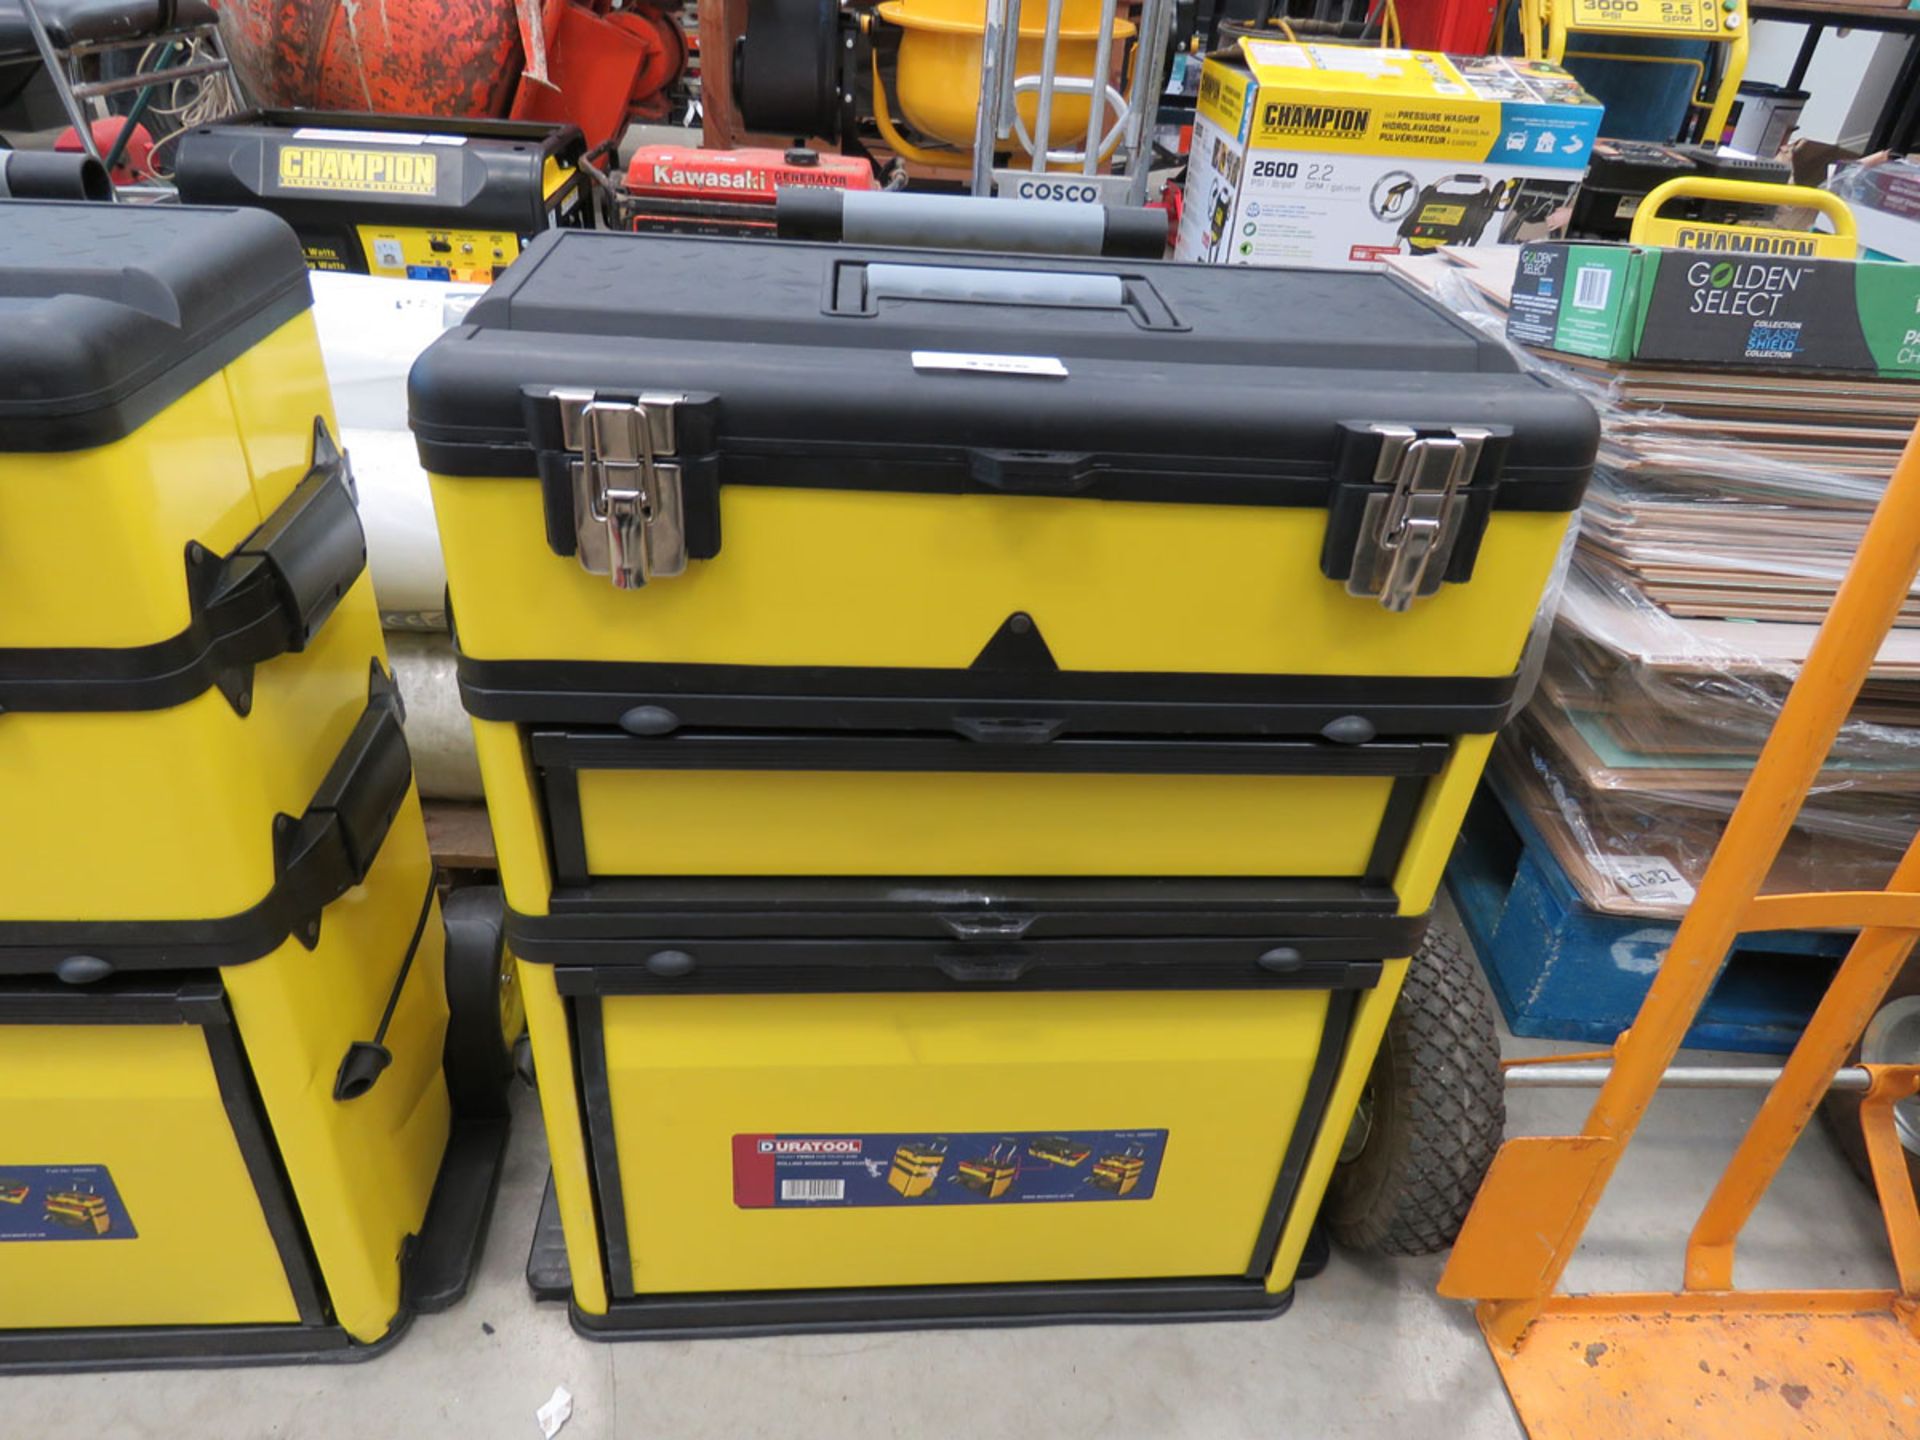 Duratool yellow and black wheeled tool box